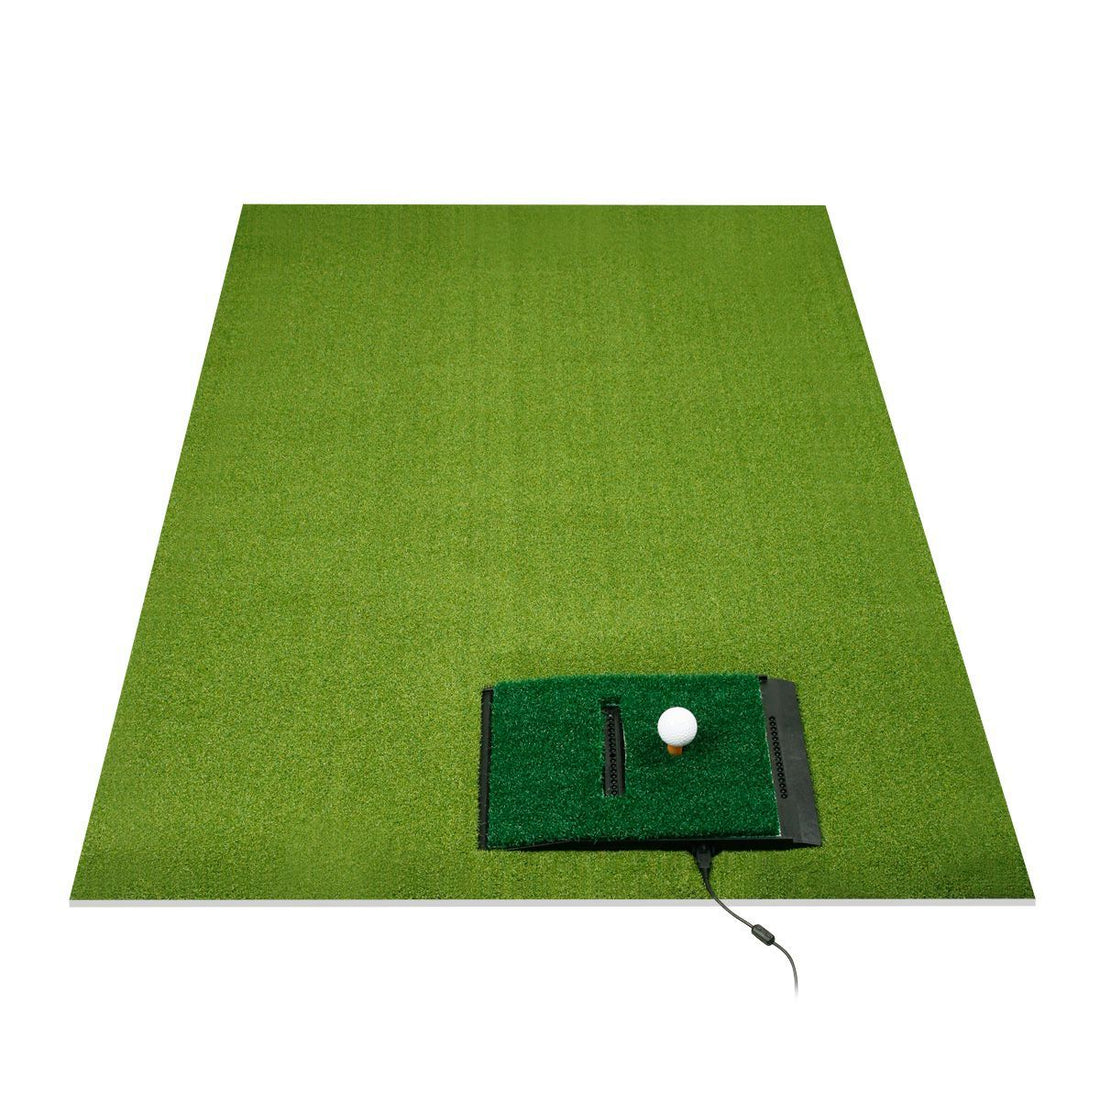 Orlimar Golf Mat for the Optishot 2 In-Home Golf Simulator